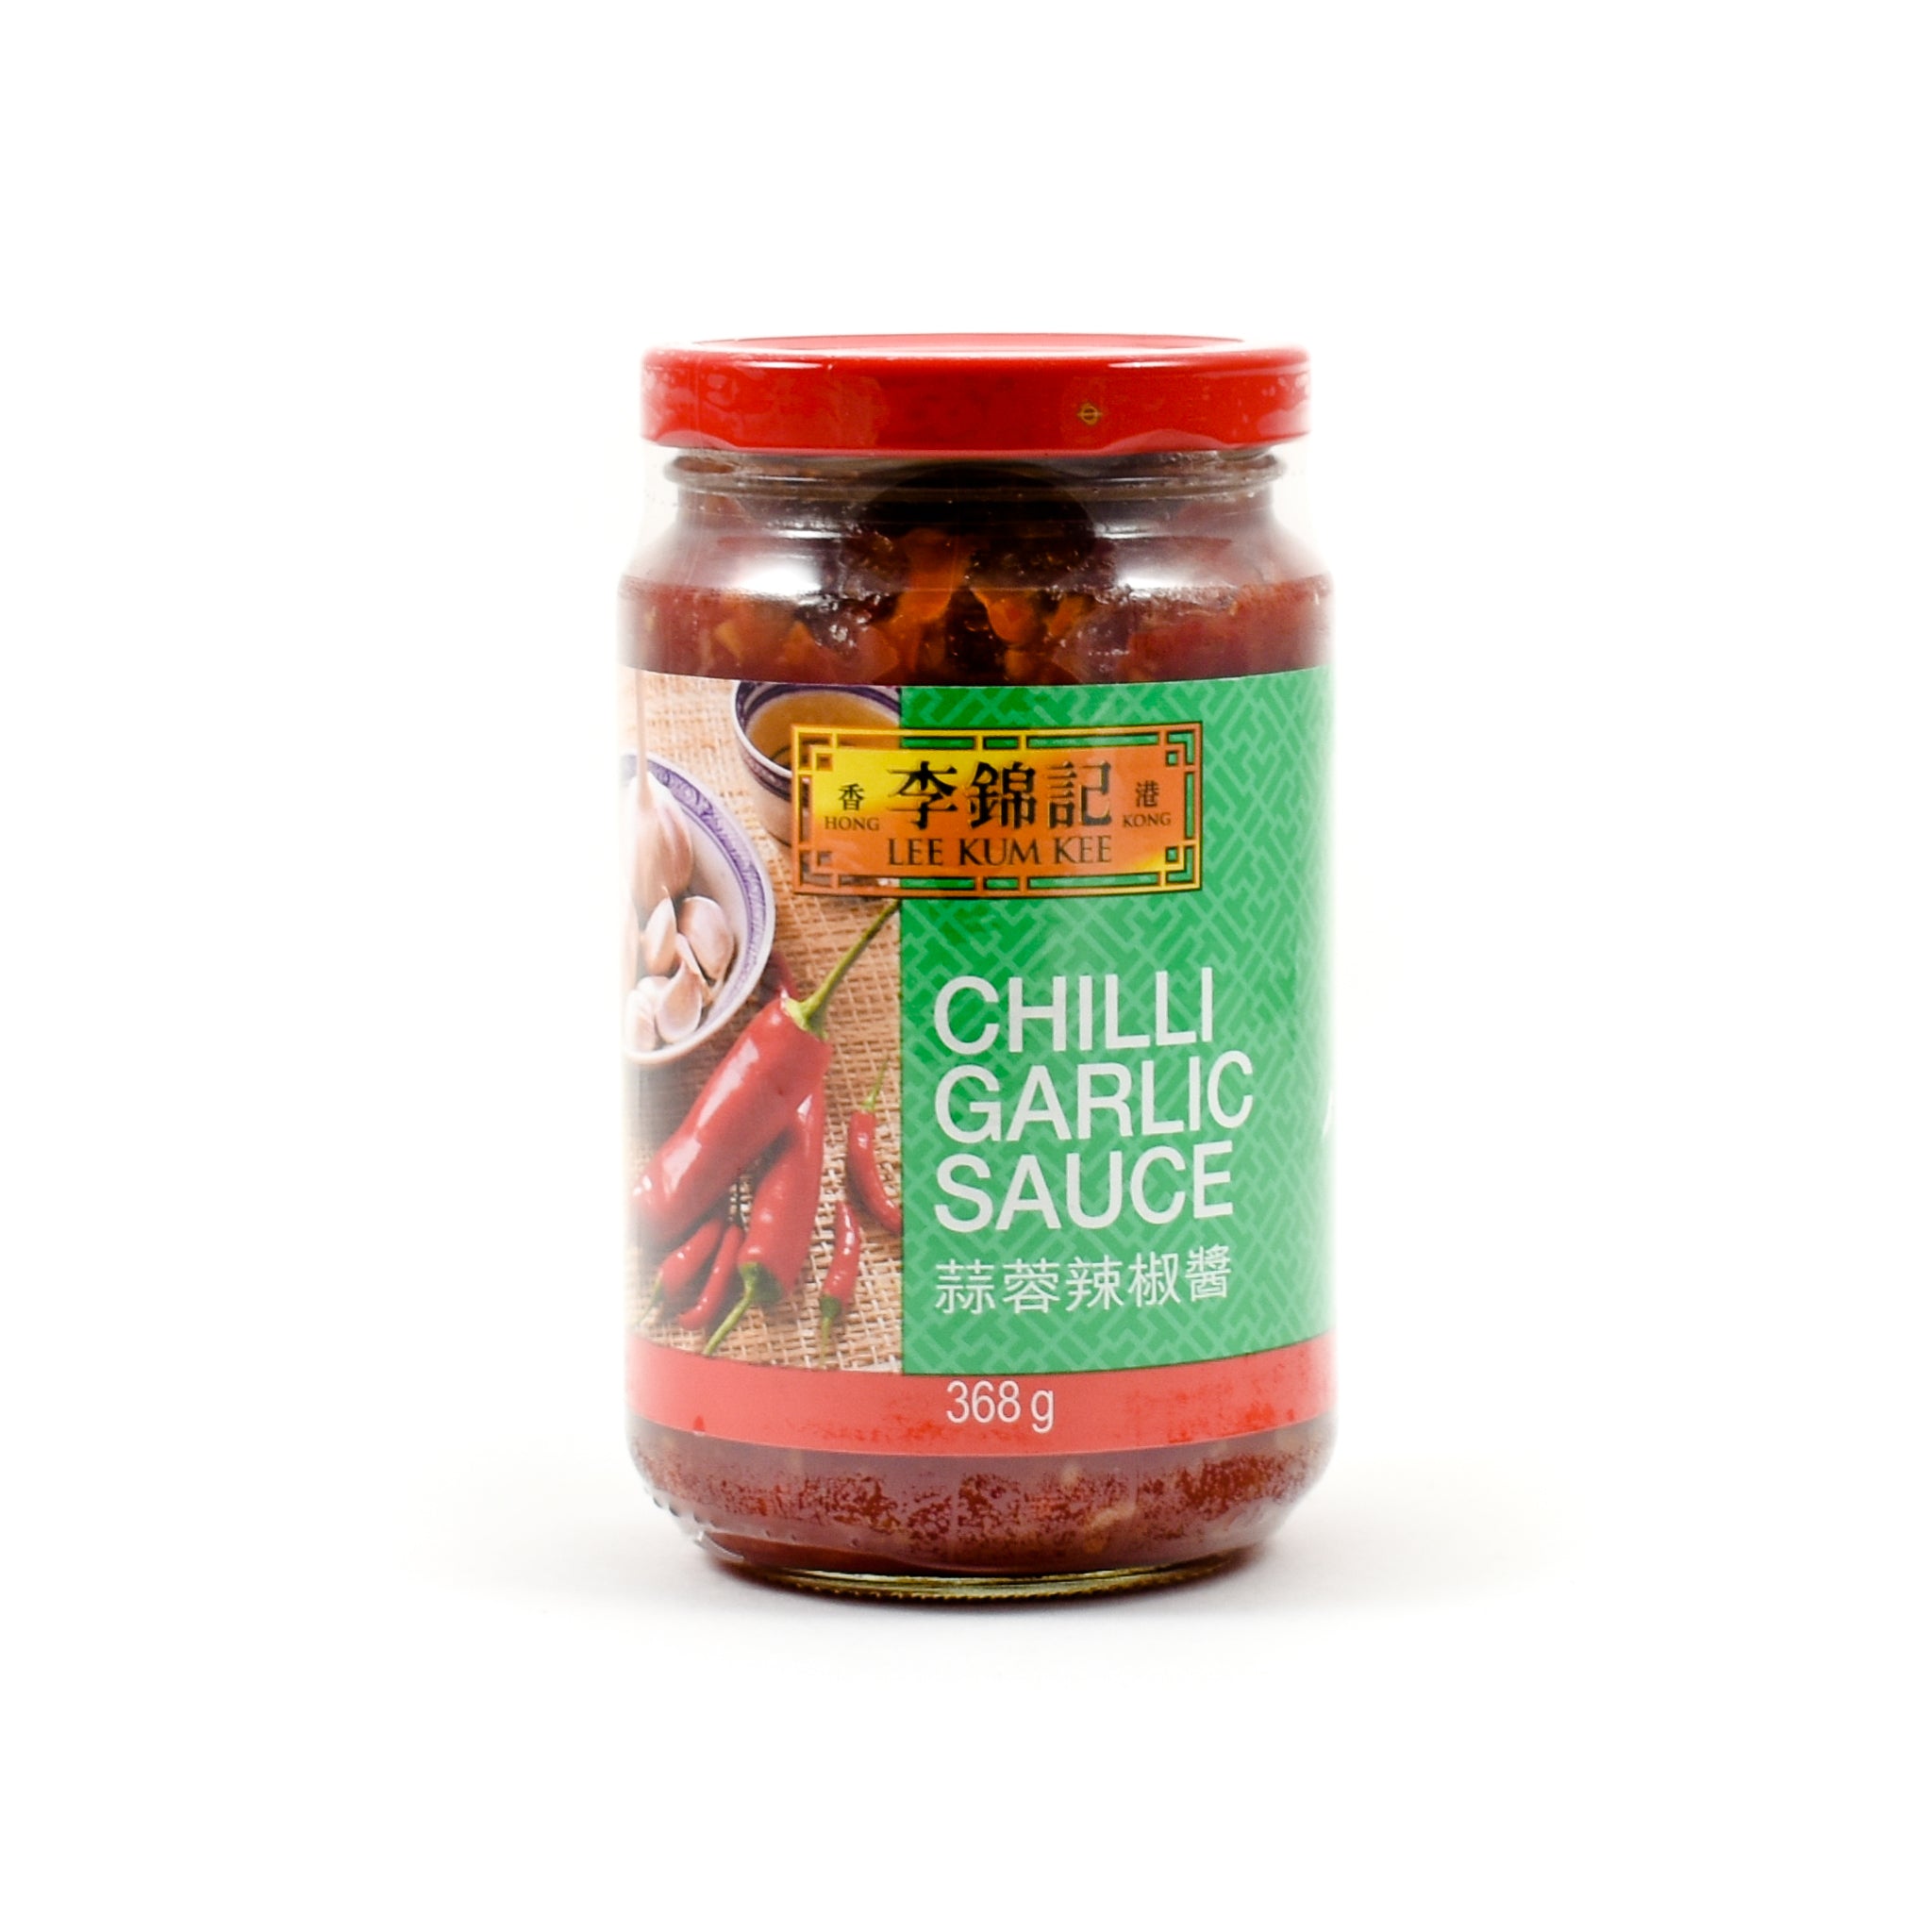 Lee Kum Kee Chilli Garlic Sauce 368g Ingredients Sauces & Condiments Asian Sauces & Condiments Chinese Food